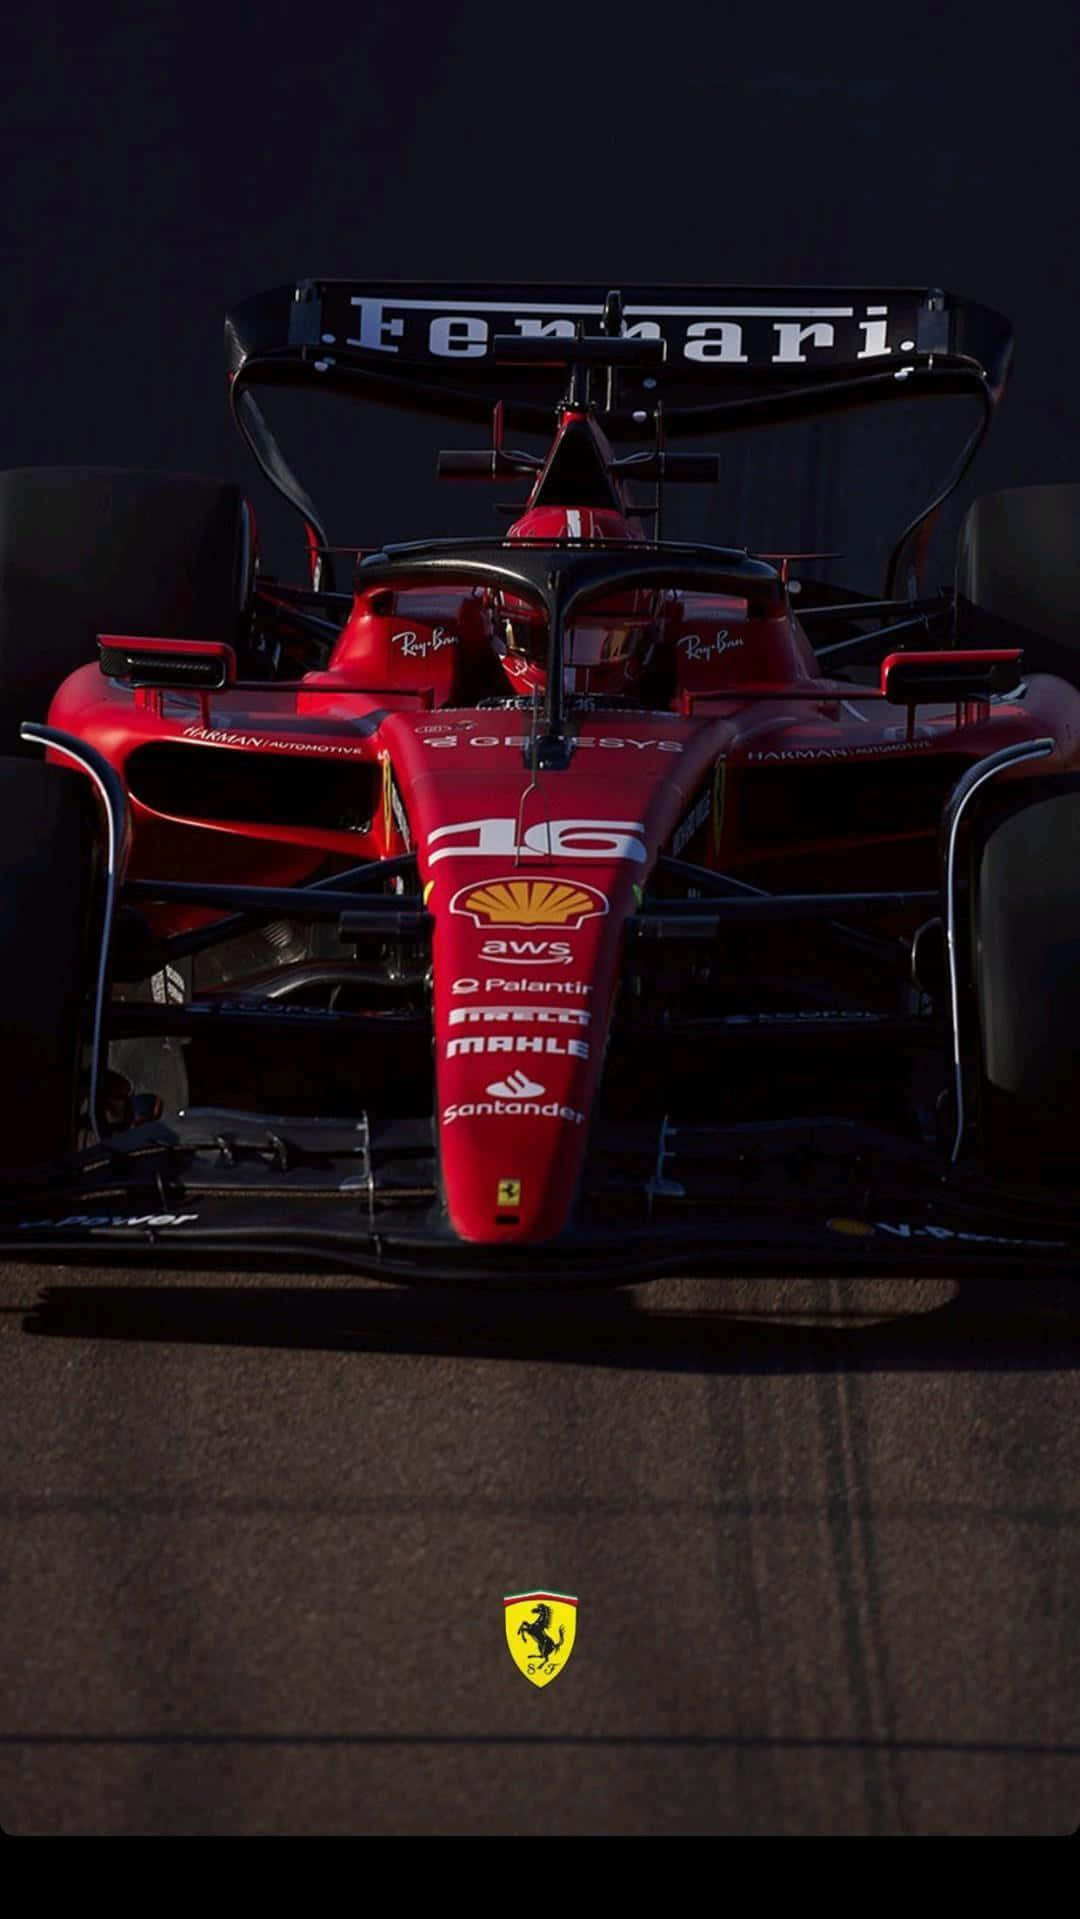 Ferrari F1 Racing Car Rear View Wallpaper